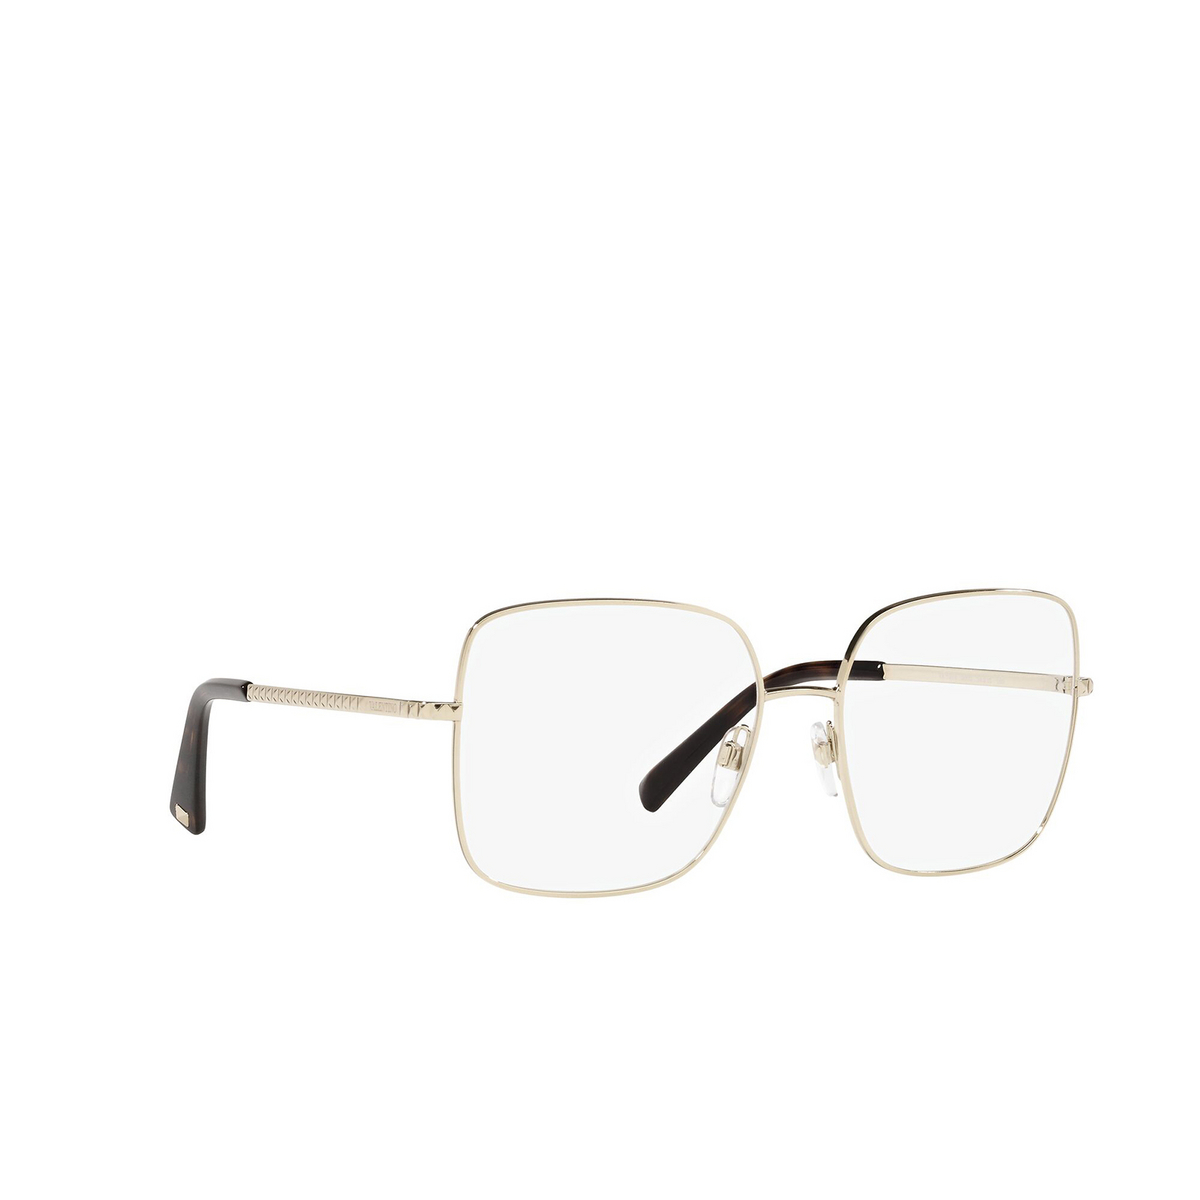 Valentino® Square Sunglasses: VA1024 color Light Gold 3003 - three-quarters view.